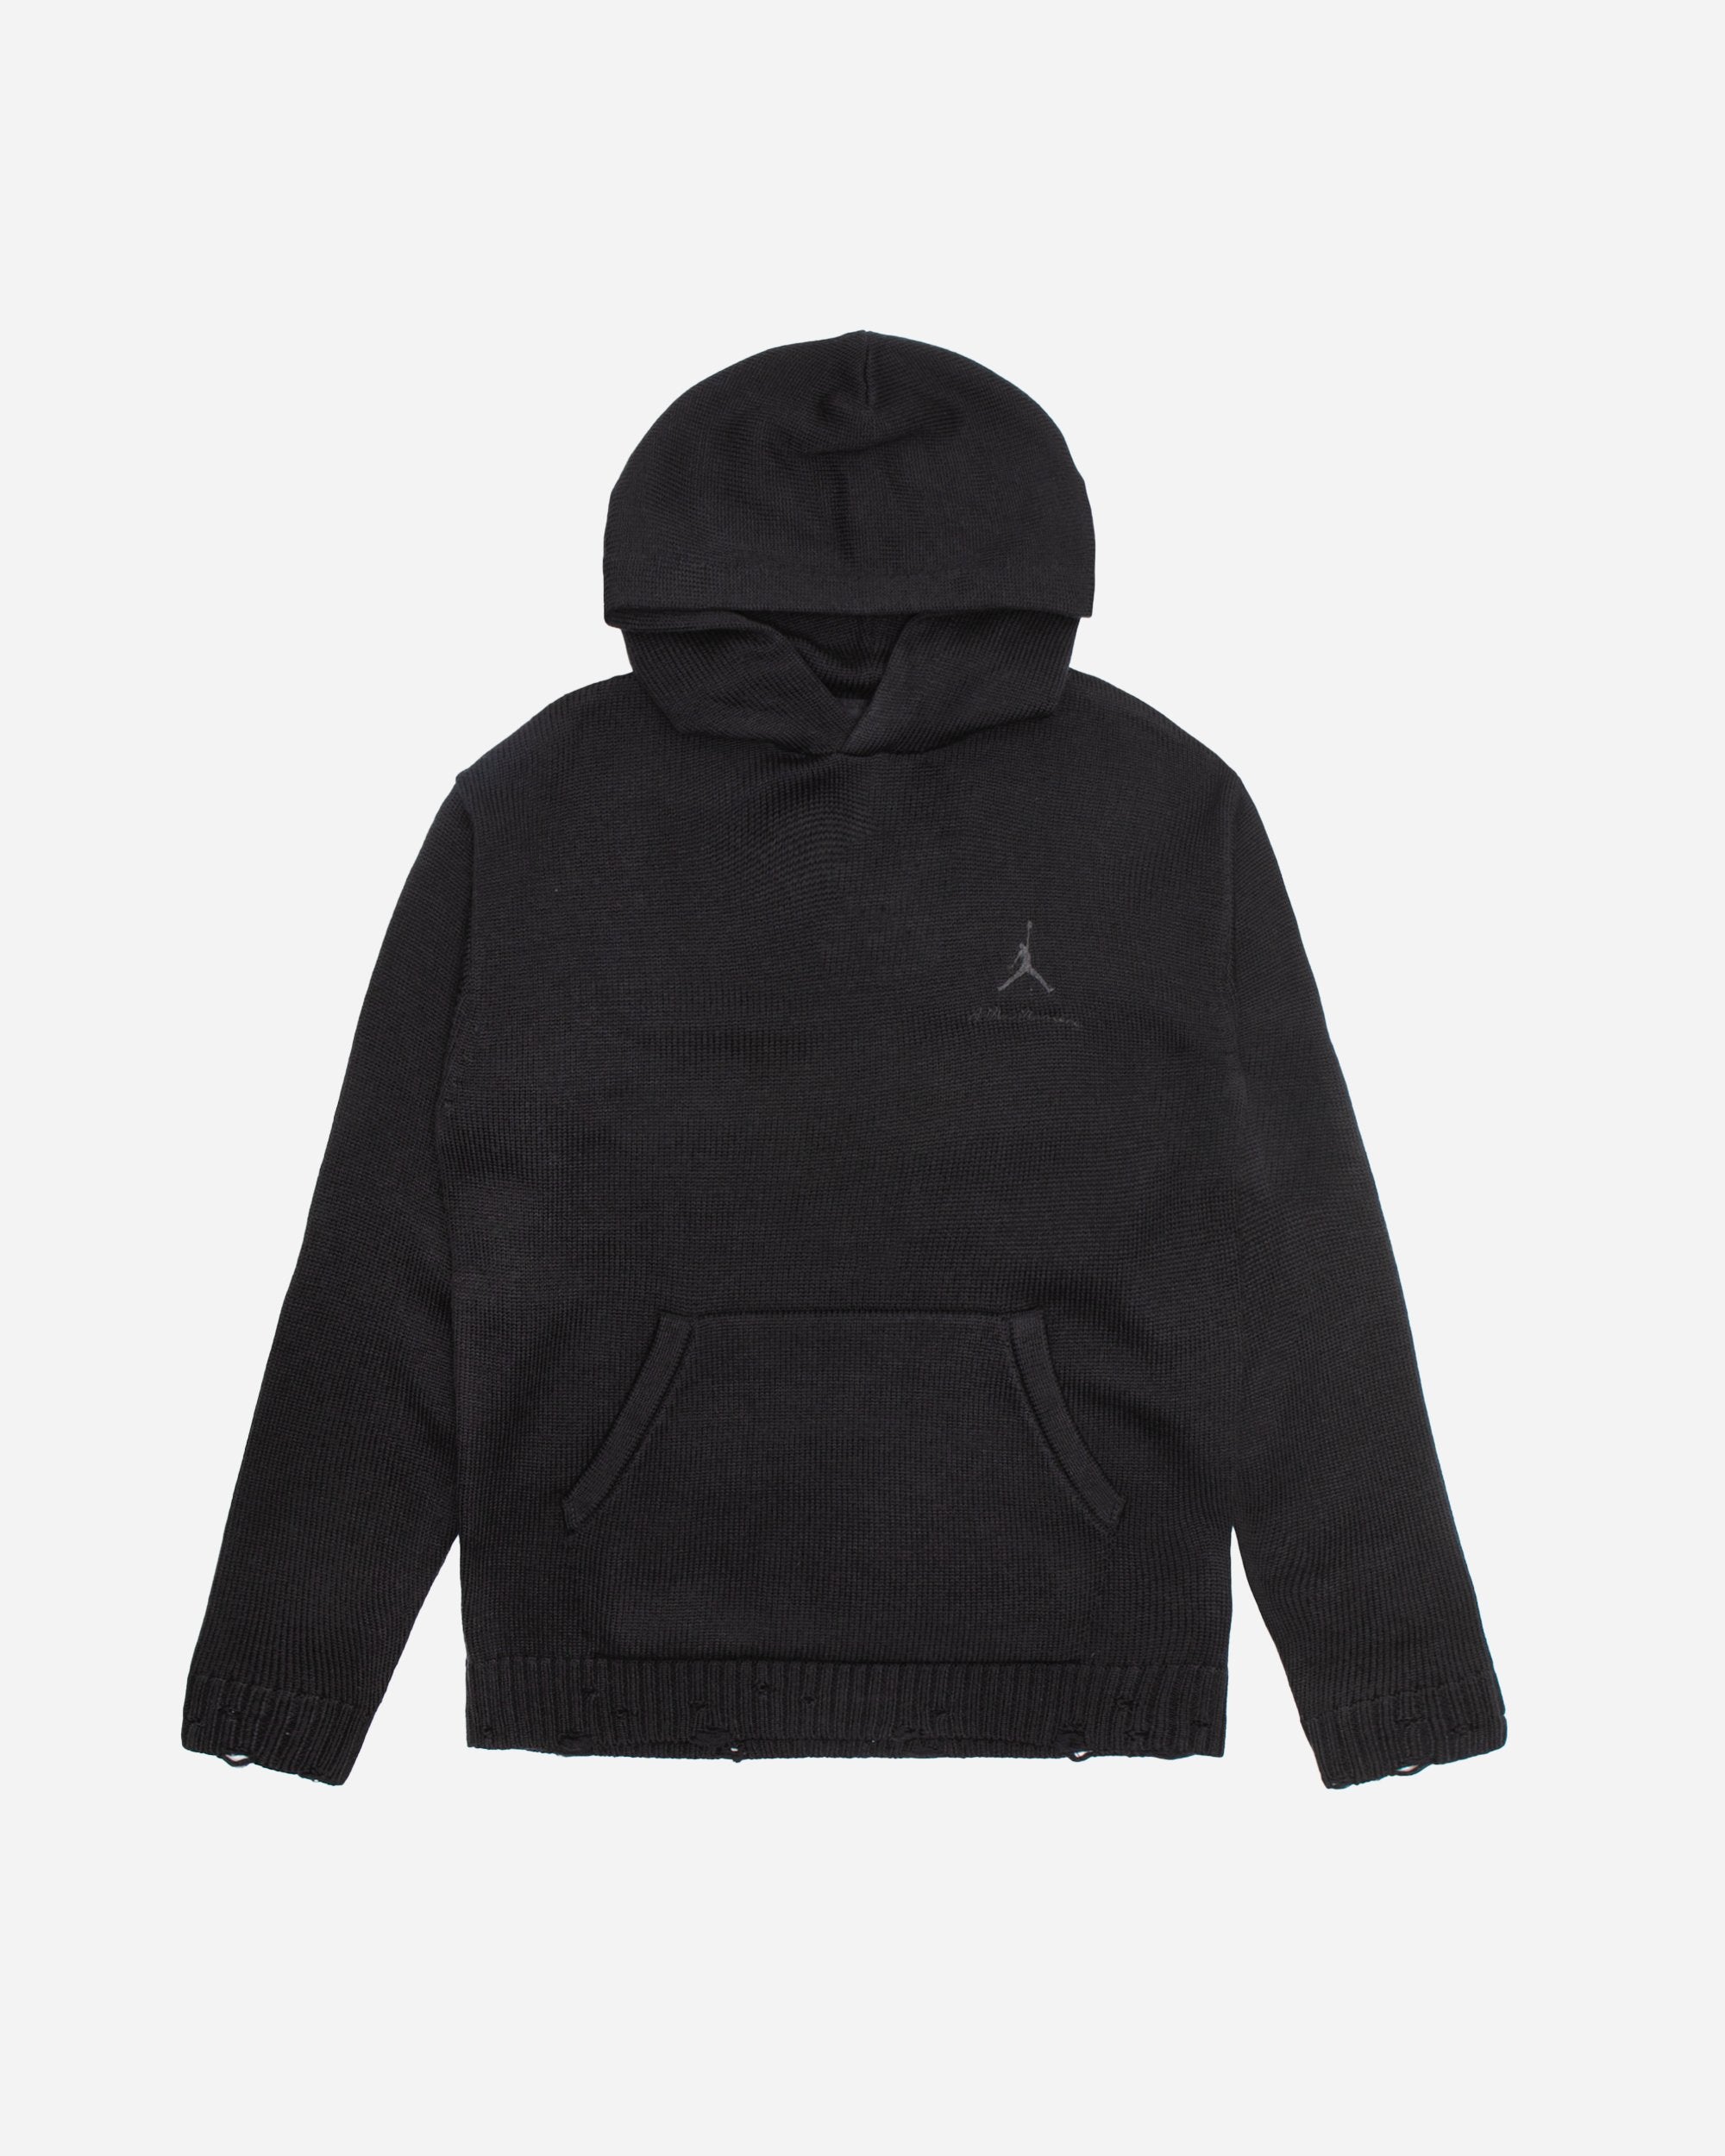 Jordan Brand x A Ma Maniére Hoodie Sweater